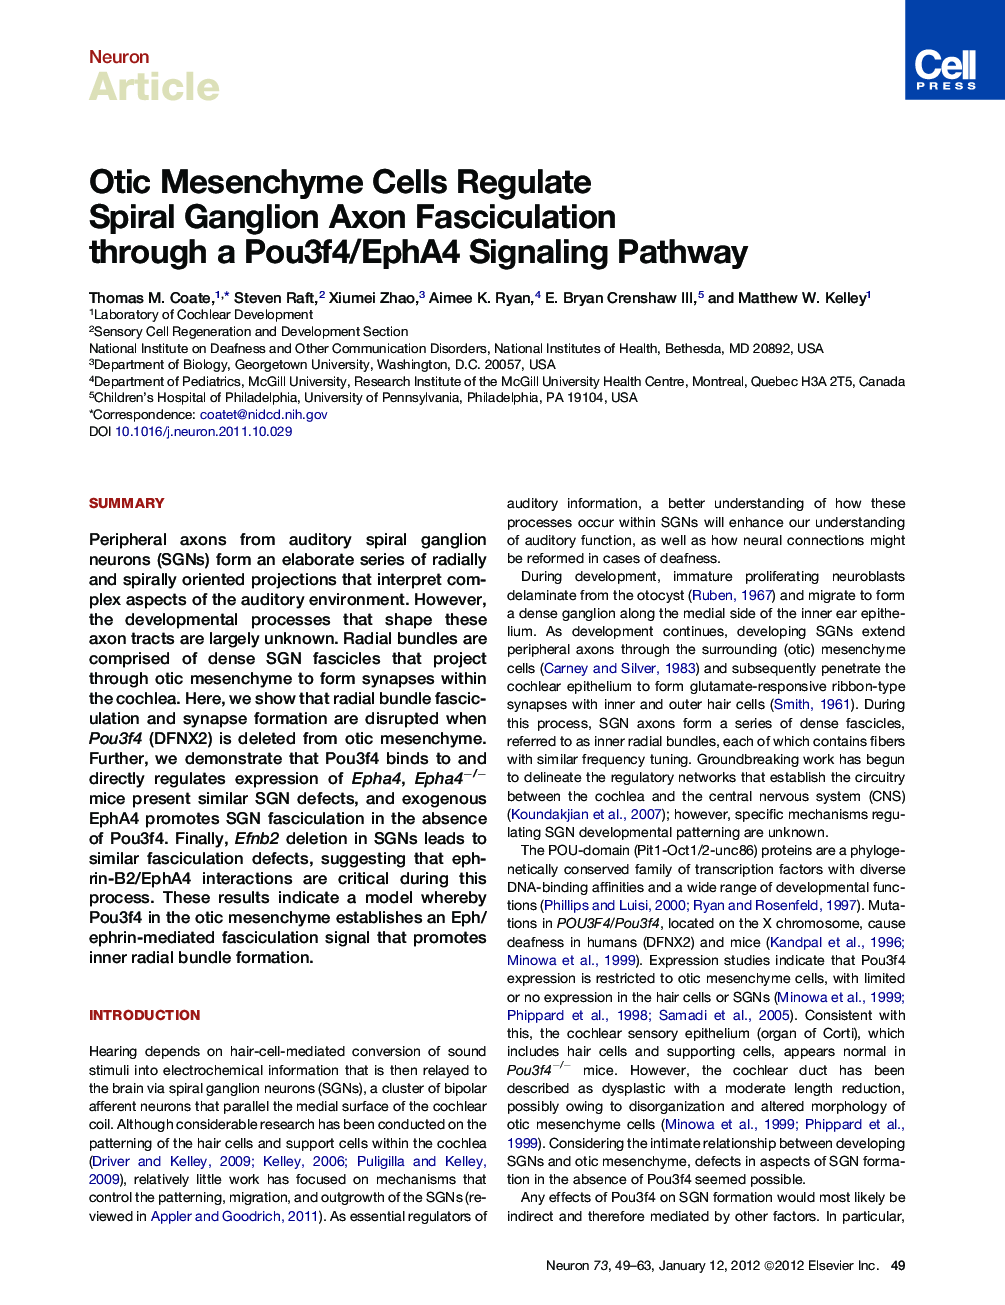 Otic Mesenchyme Cells Regulate Spiral Ganglion Axon Fasciculation through a Pou3f4/EphA4 Signaling Pathway